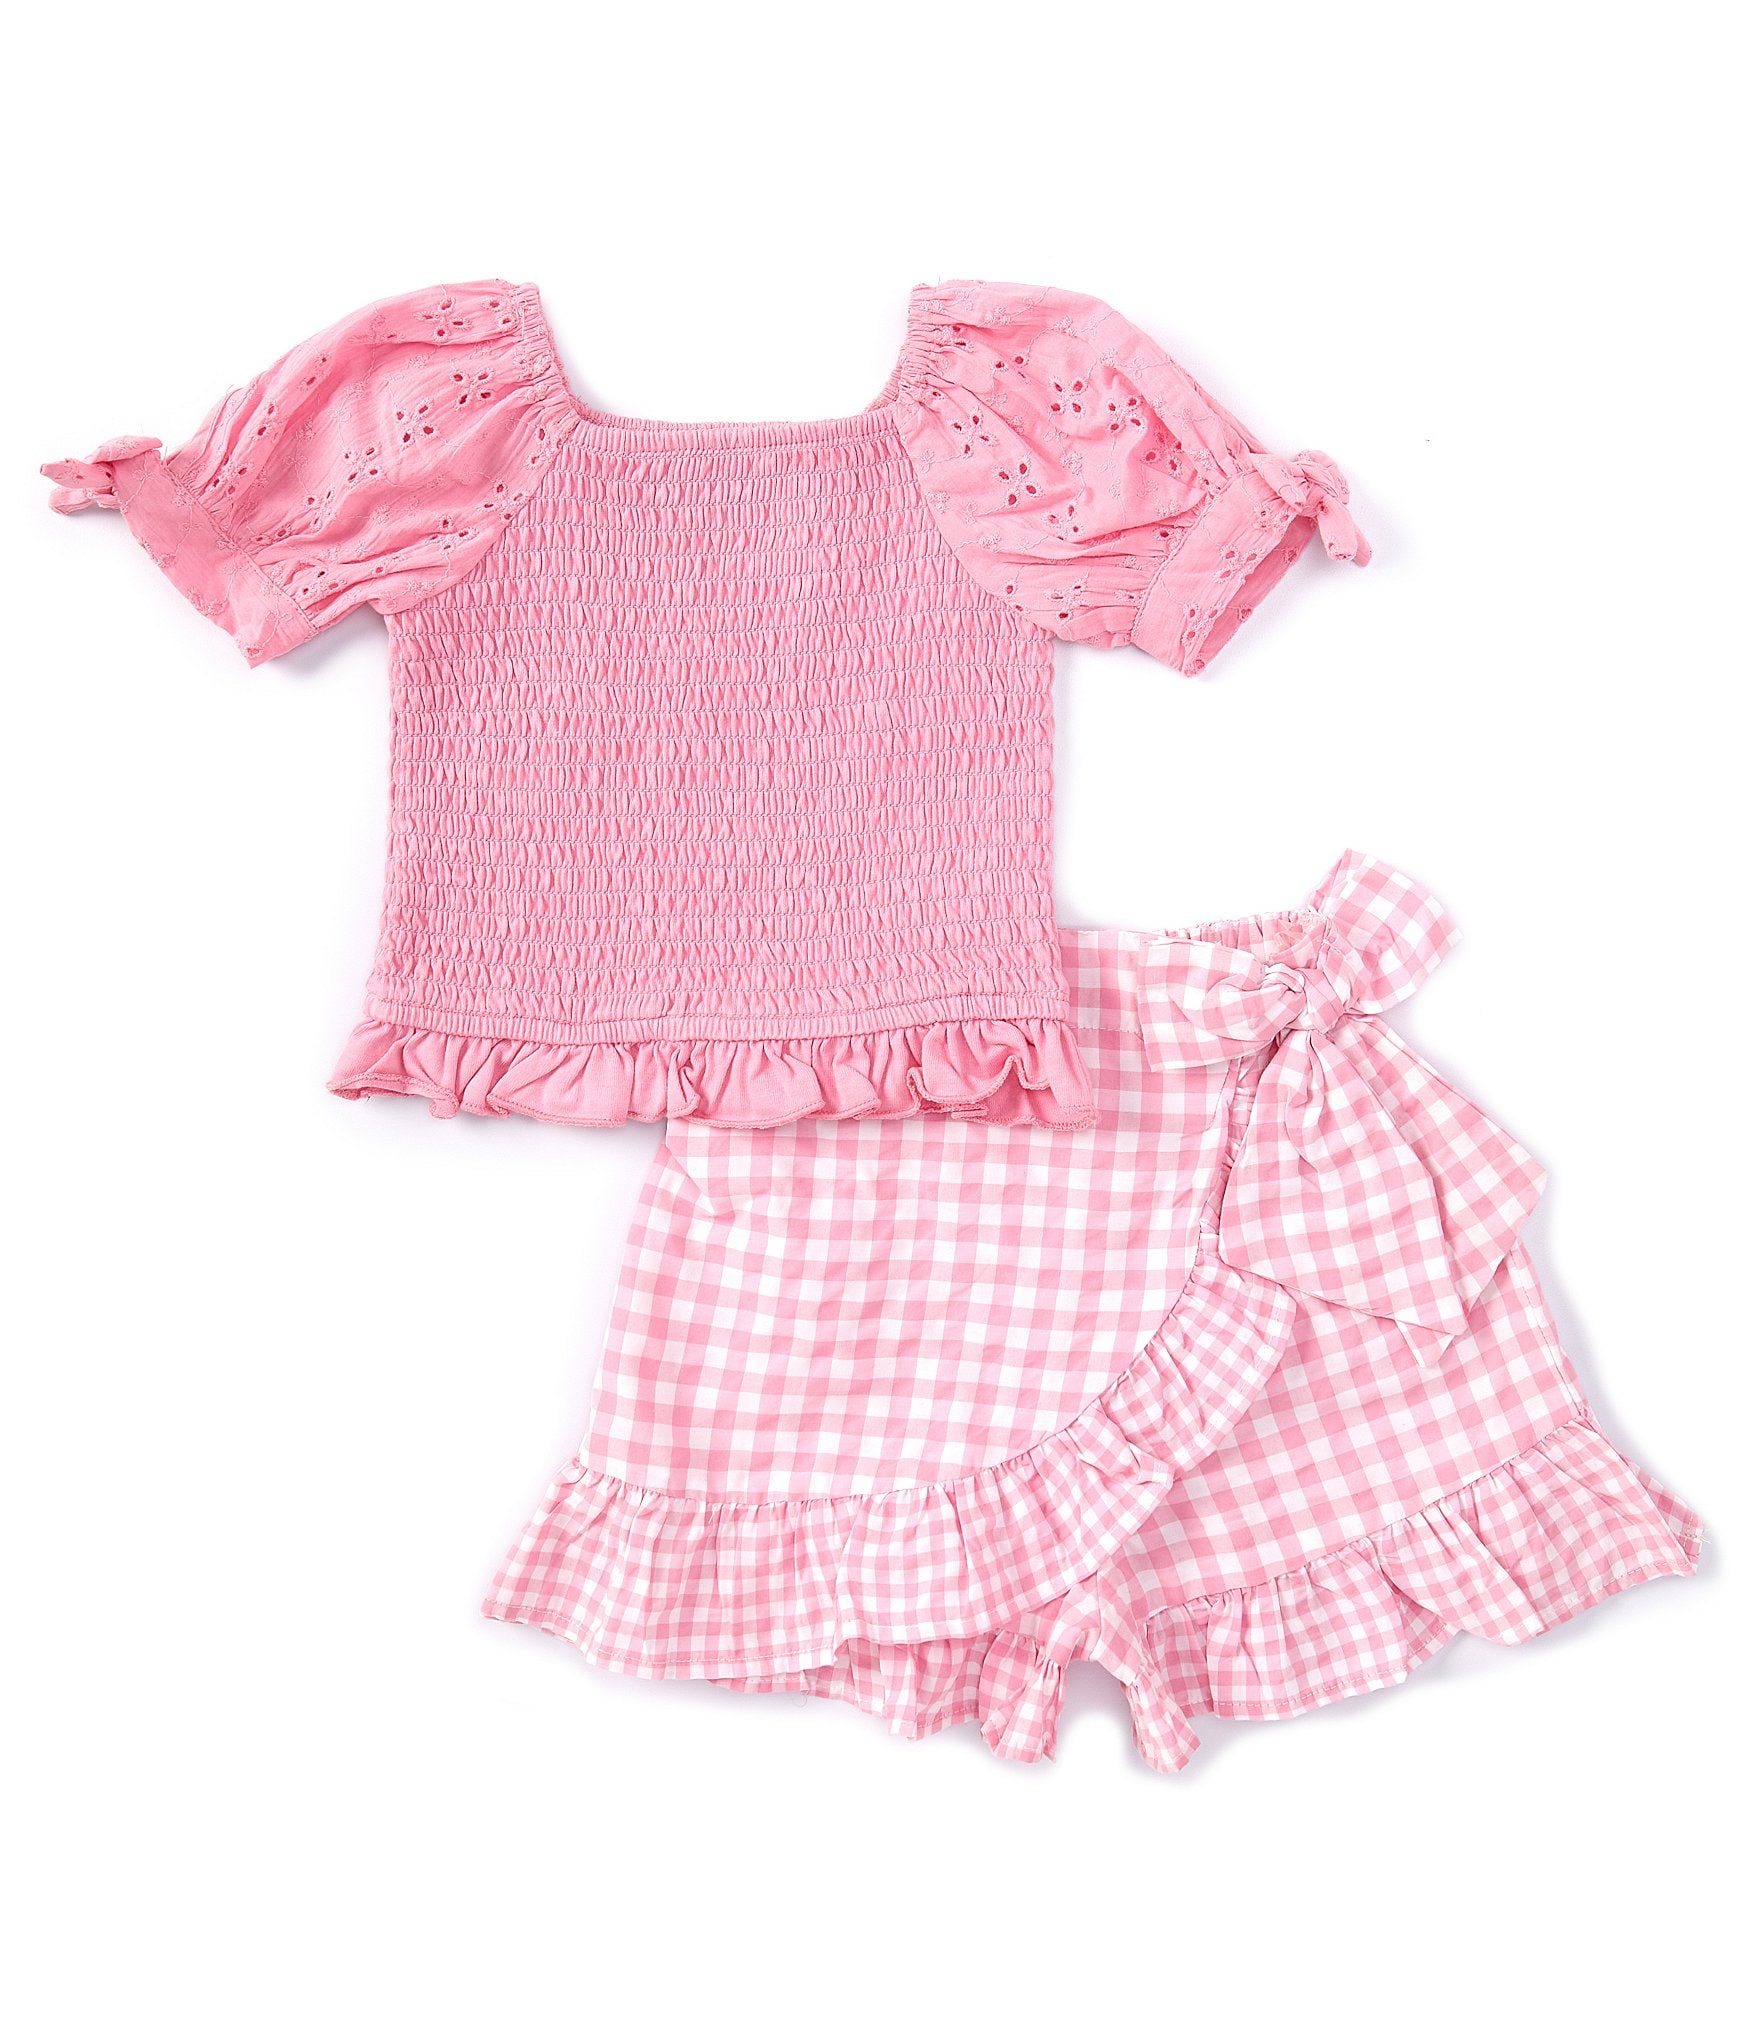 Rare Editions Little Girls 2T-6X Short Sleeve Heart-Appliqued Rib-Knit Tee  & Cheetah Print Leggings Set